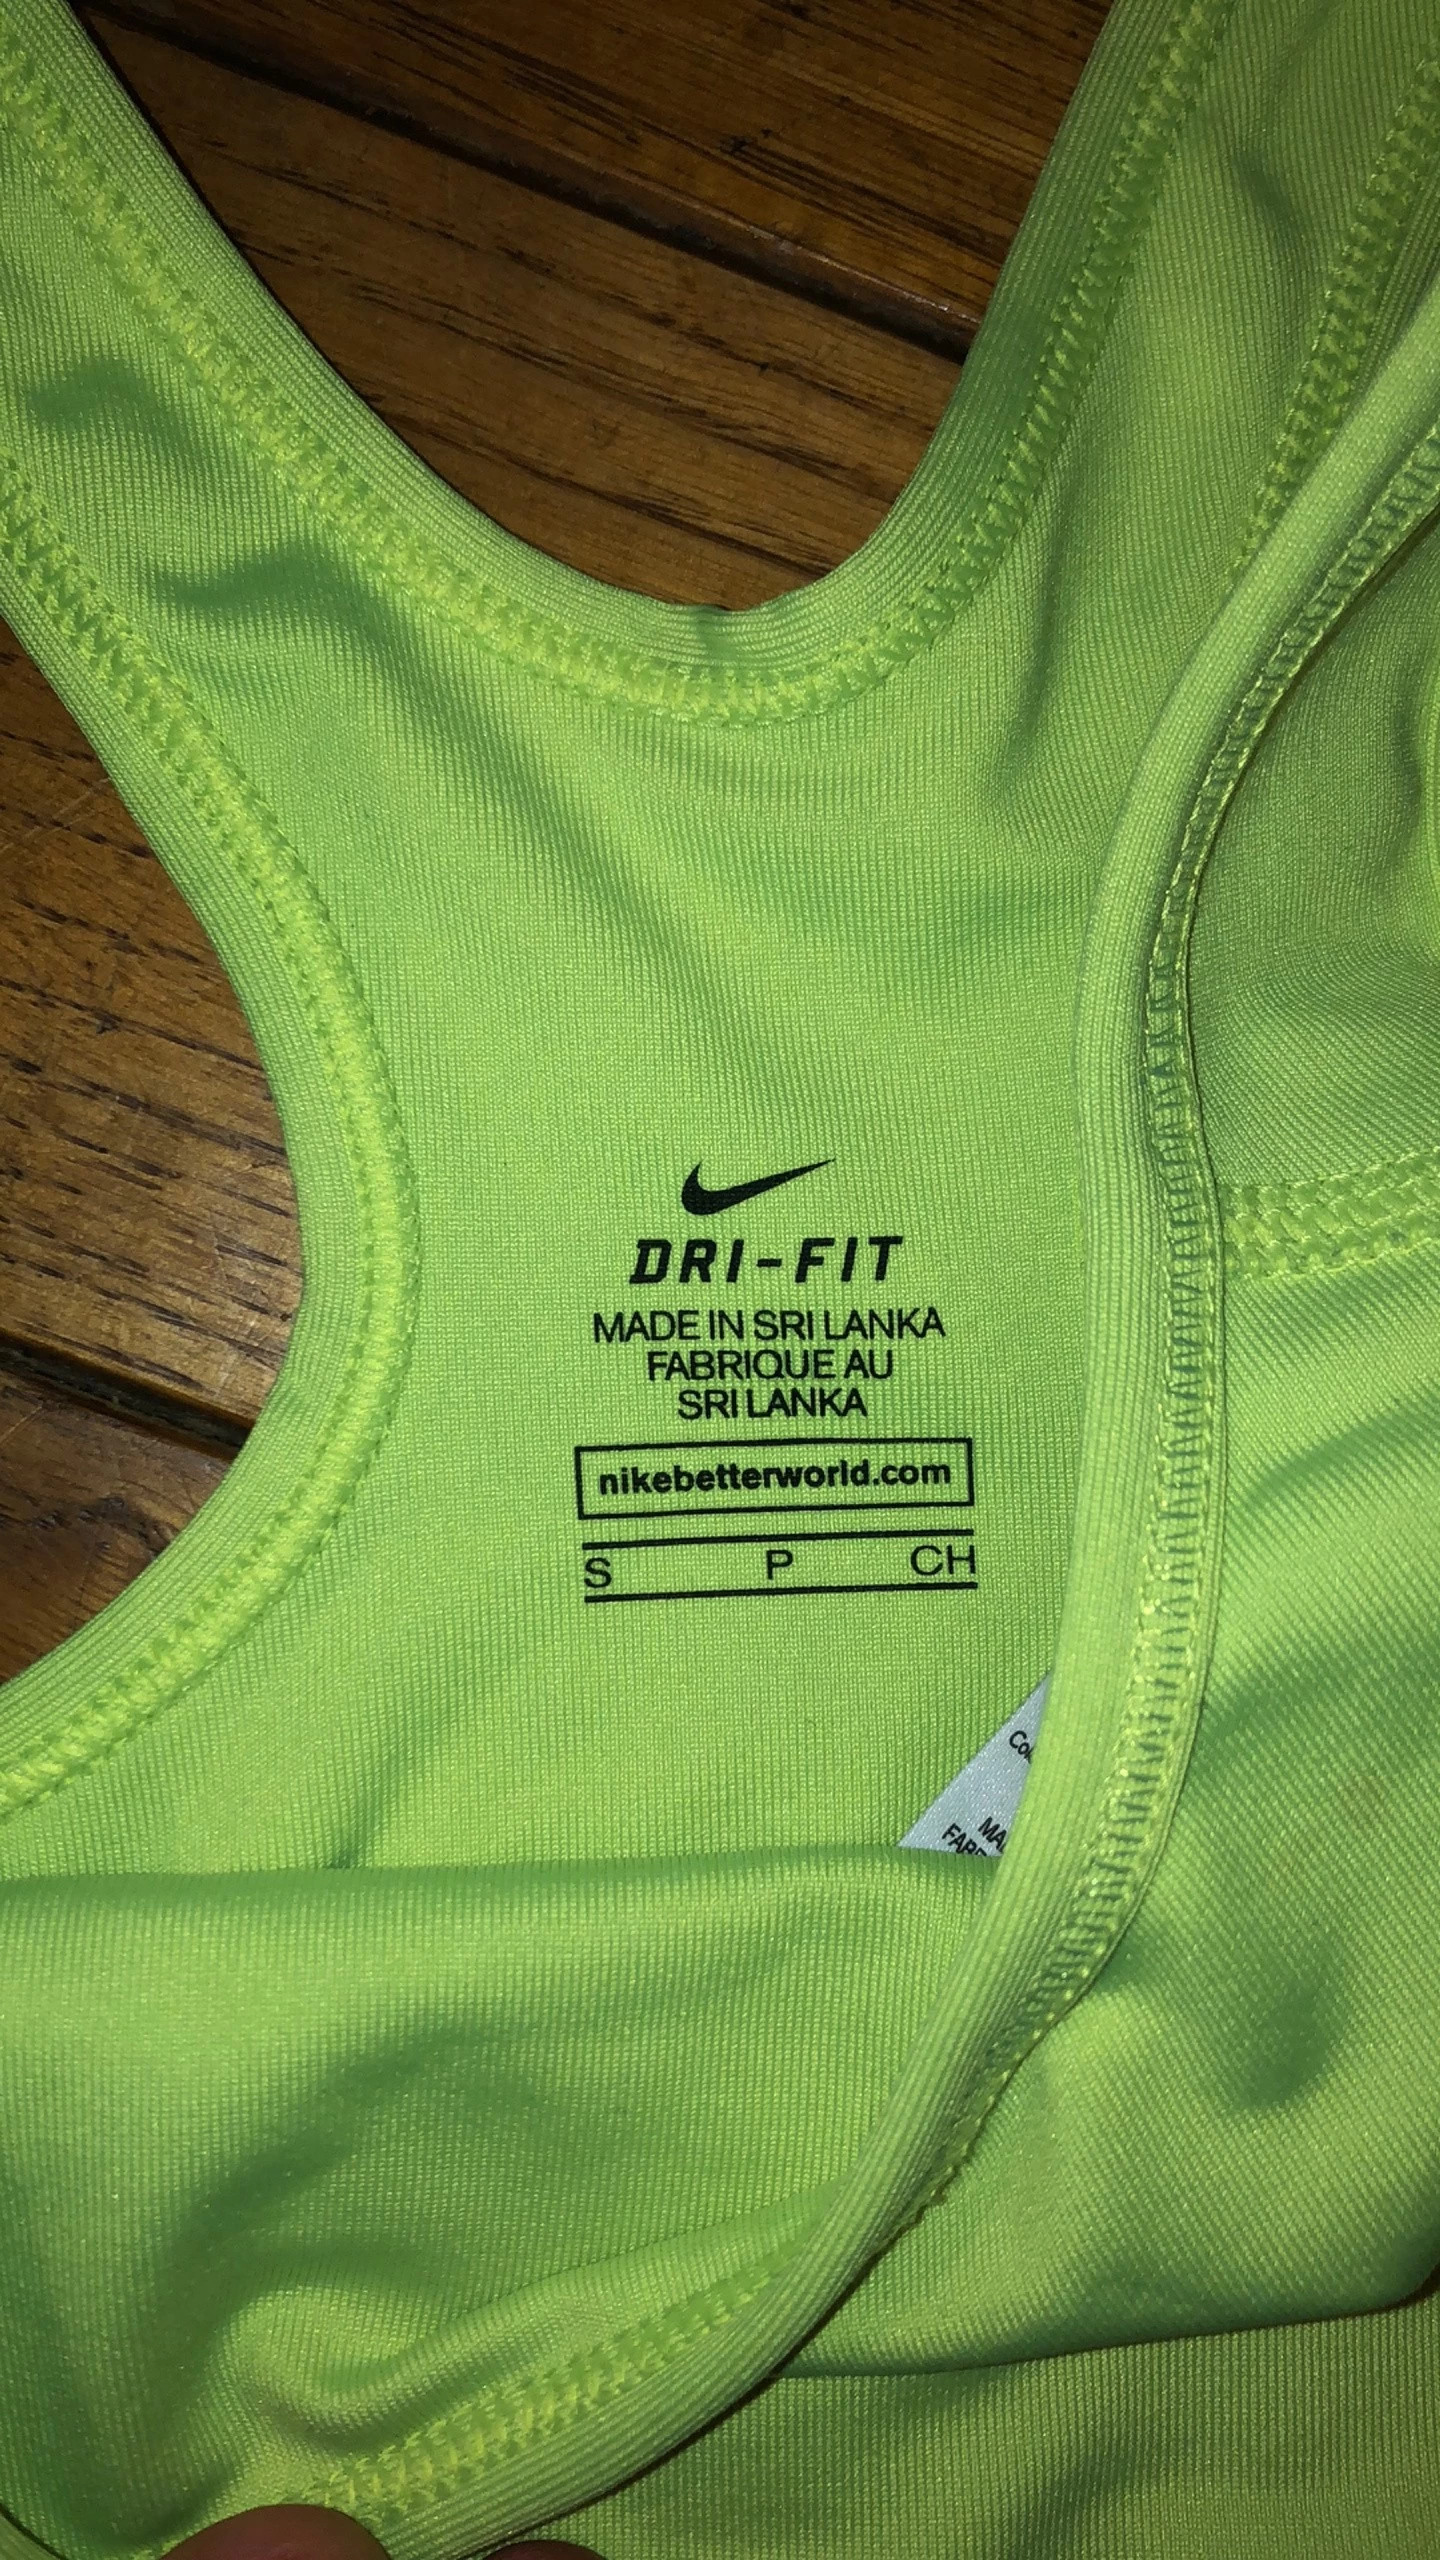 Brassière Nike sport jaune fluo